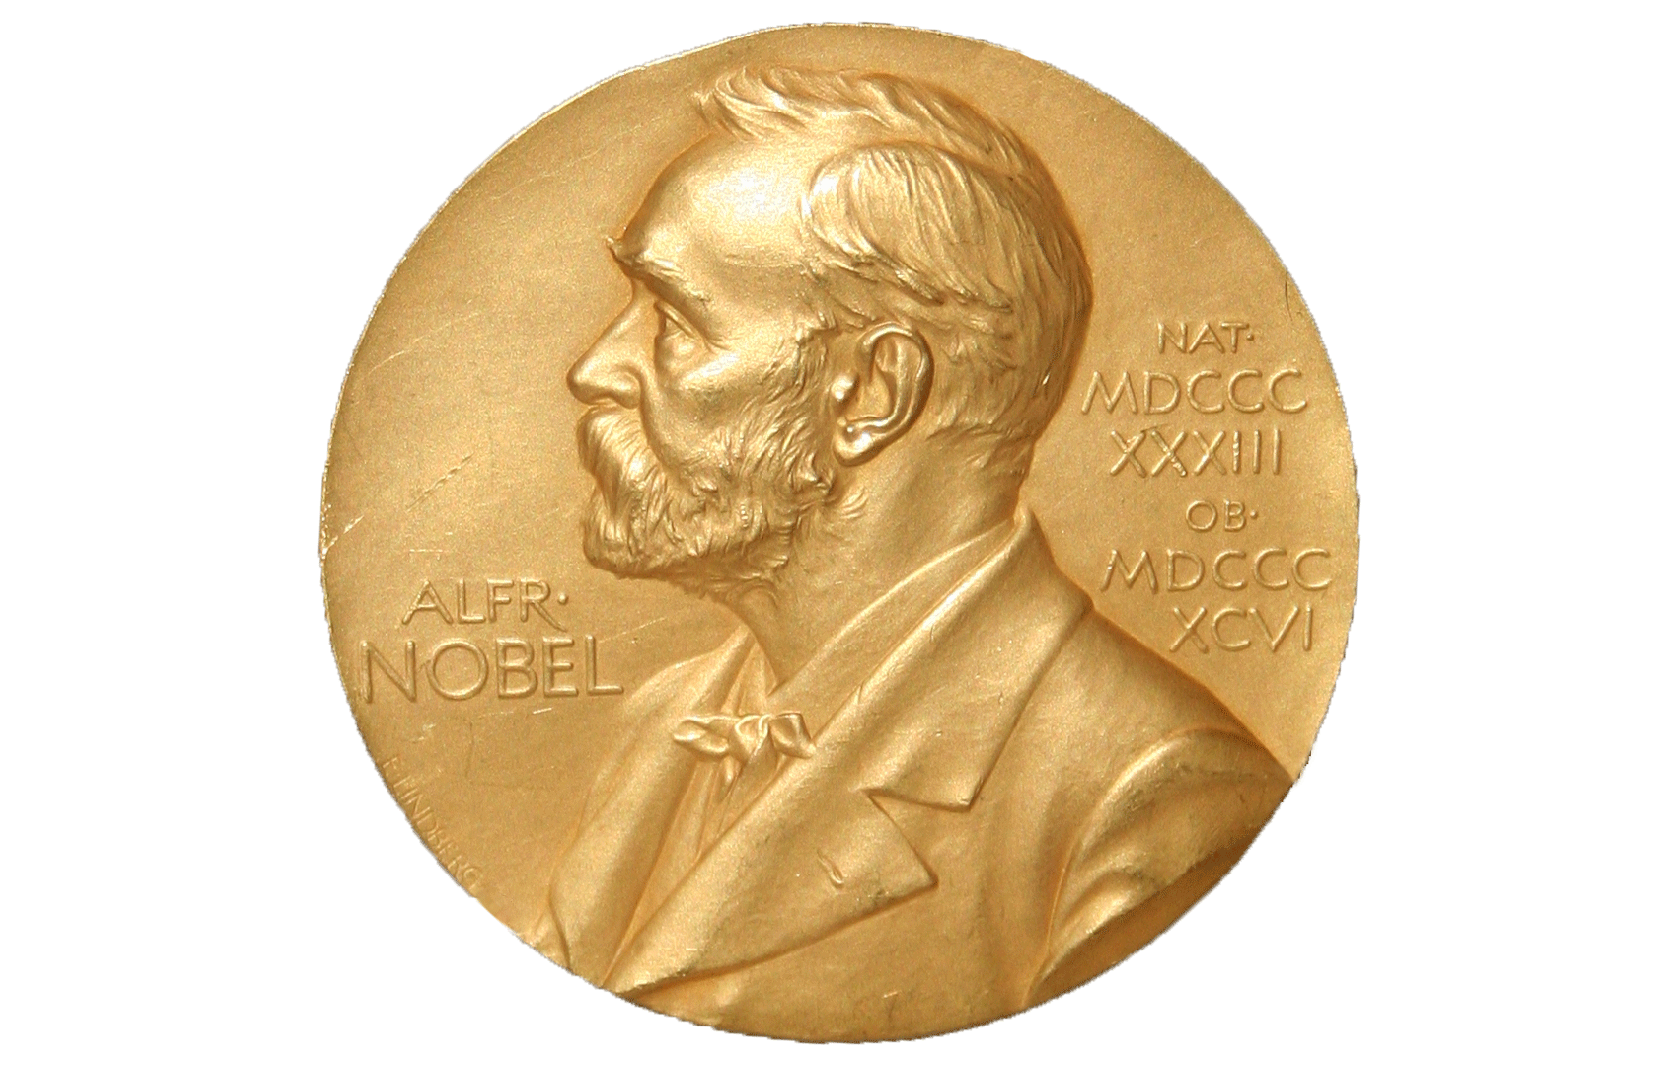 Quaker orgs announce Nobel Prize nominations